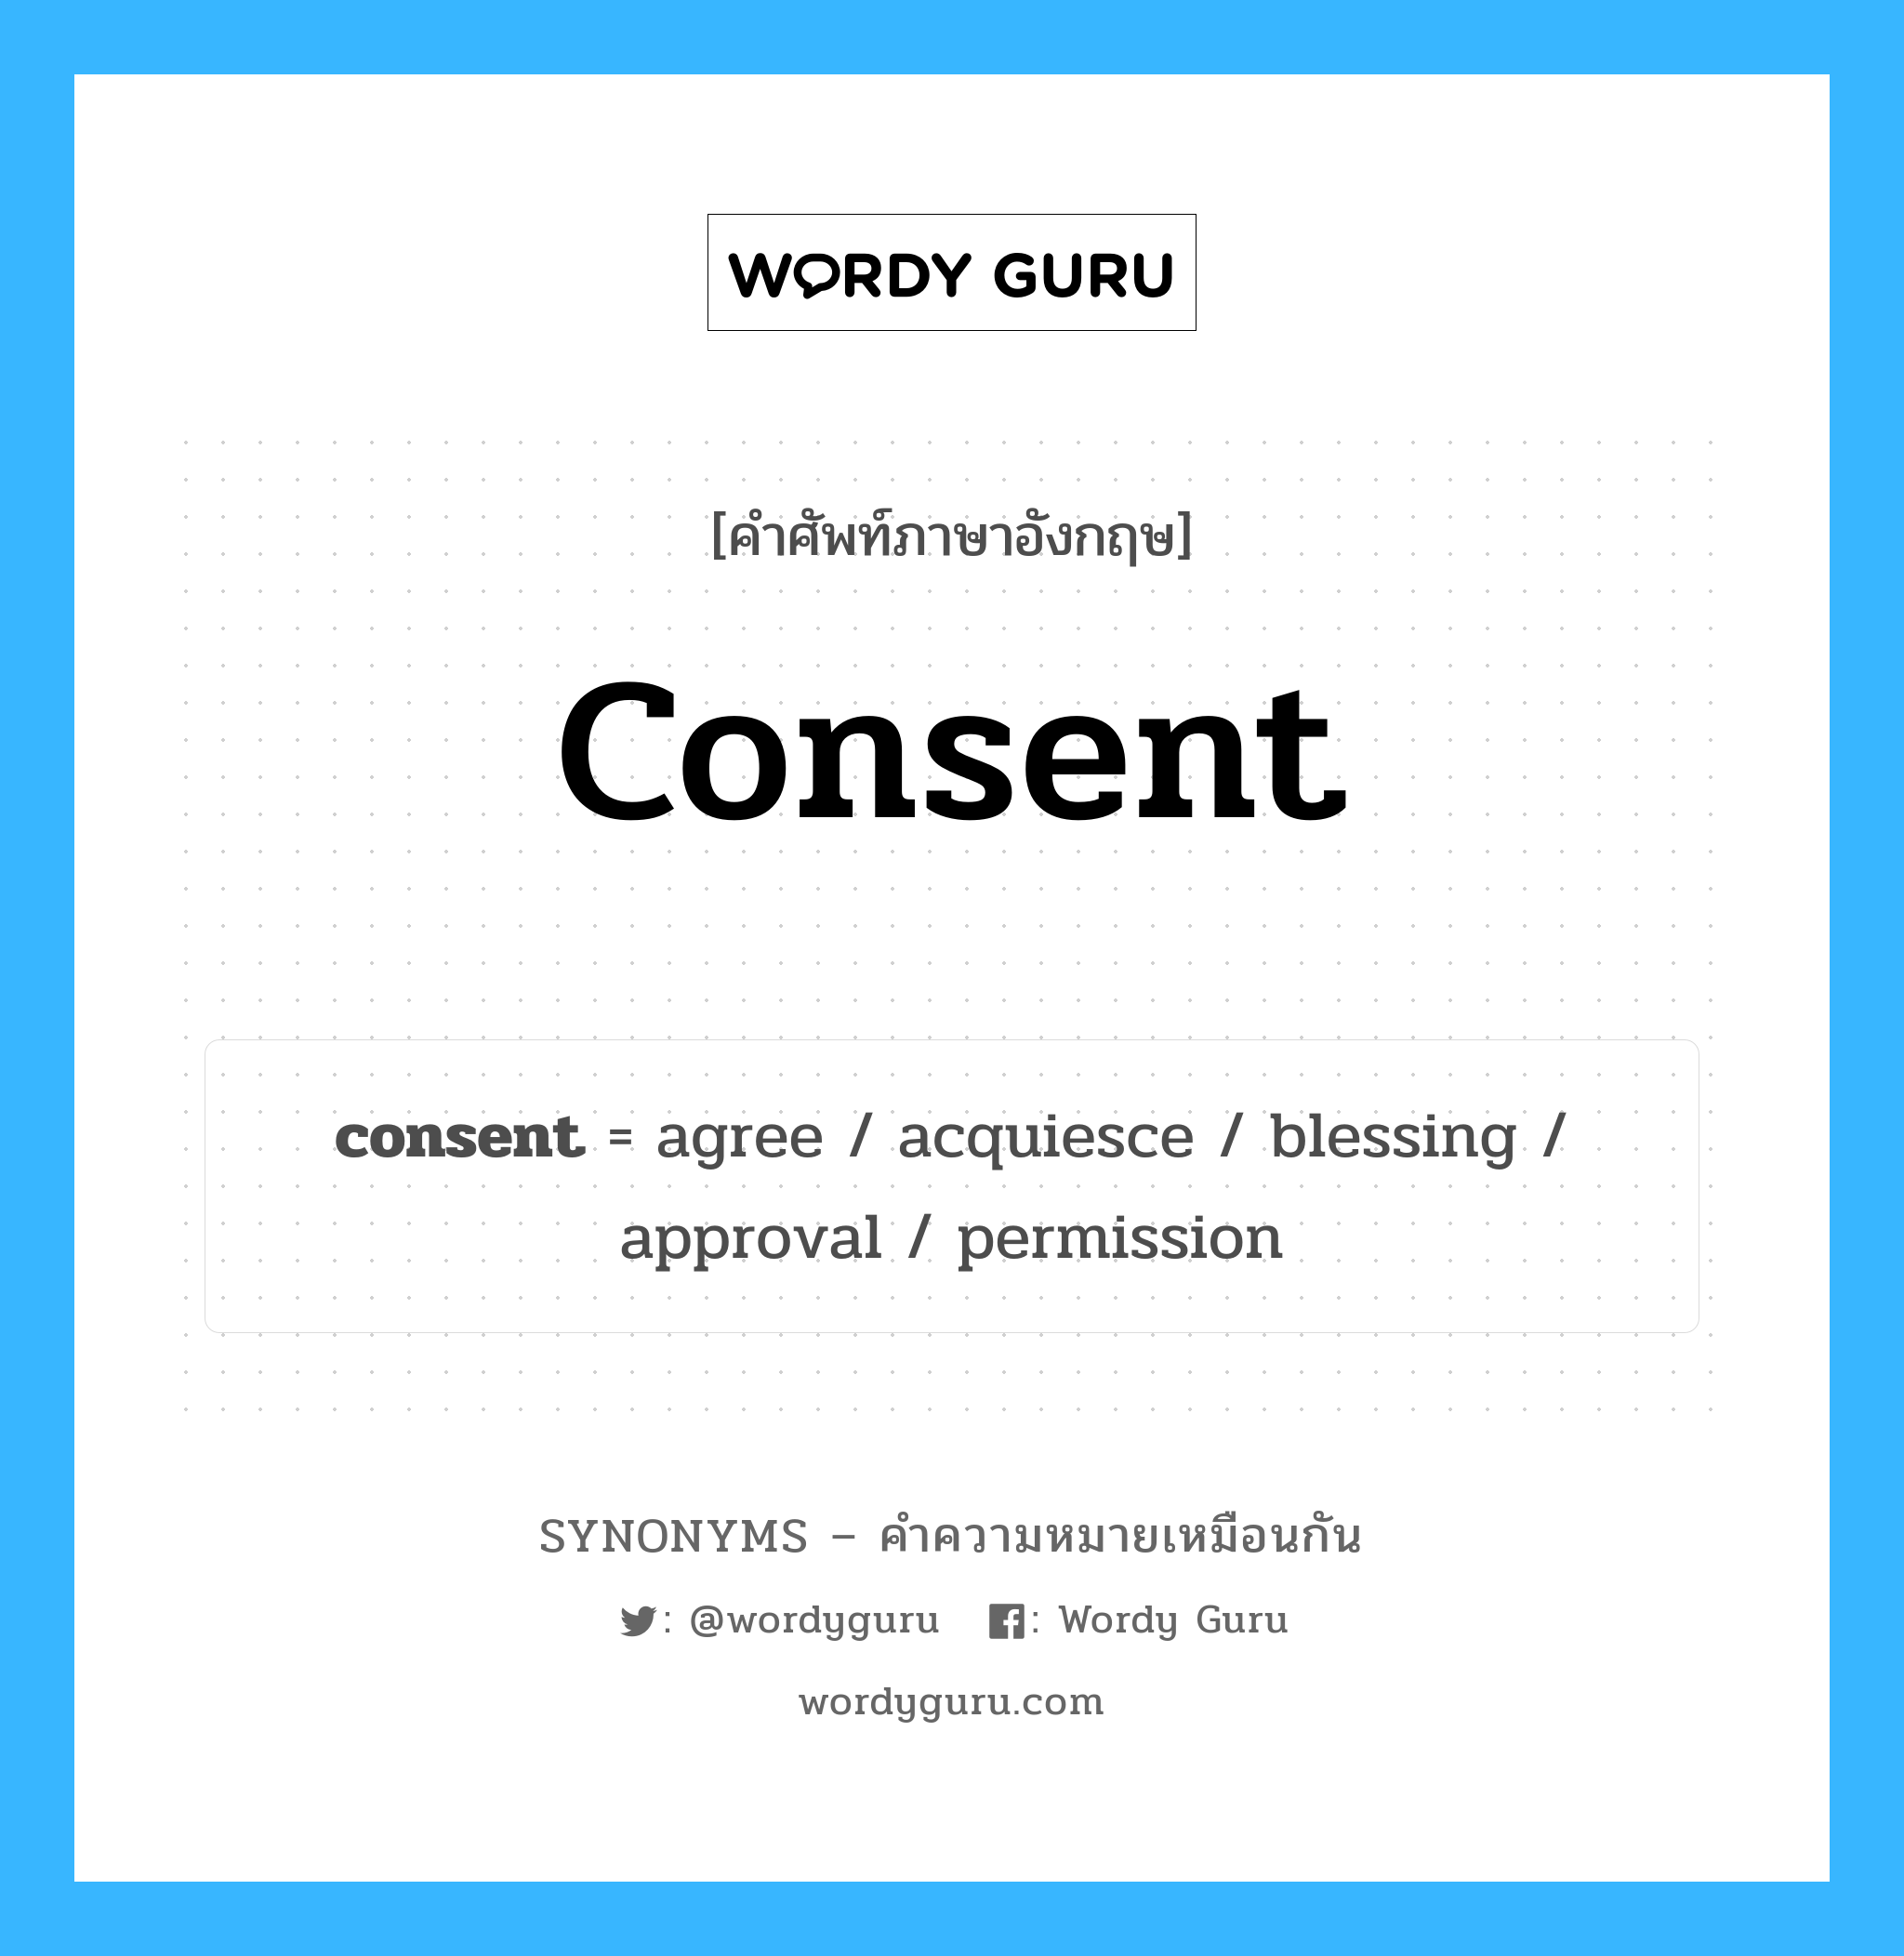 agree เป็นหนึ่งใน consent และมีคำอื่น ๆ อีกดังนี้, คำศัพท์ภาษาอังกฤษ agree ความหมายคล้ายกันกับ consent แปลว่า ตกลง หมวด consent